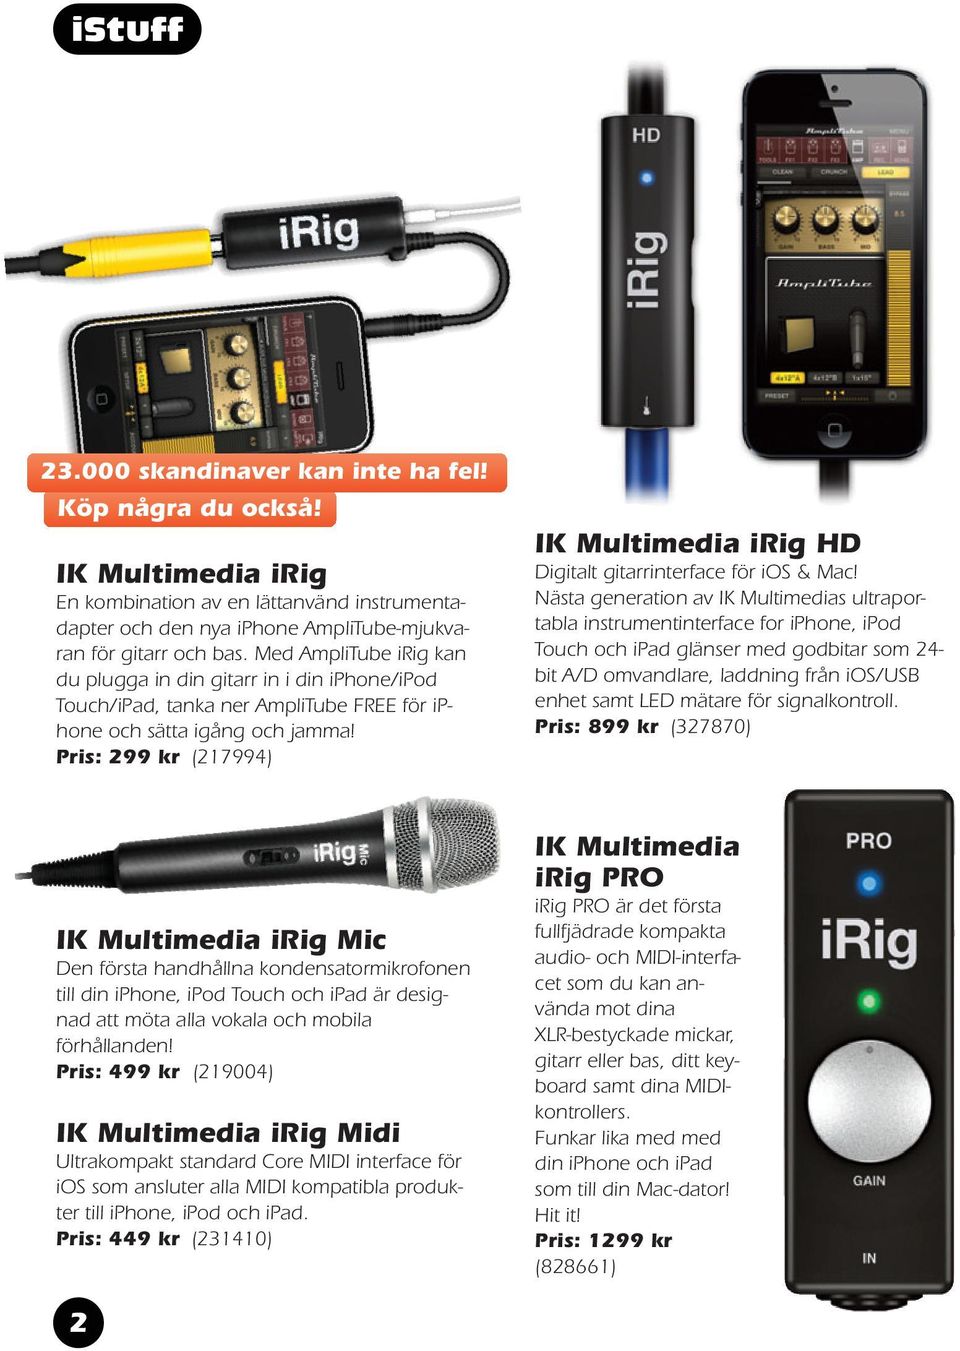 Pris: 299 kr (217994) IK Multimedia irig HD Digitalt gitarrinterface för ios & Mac!